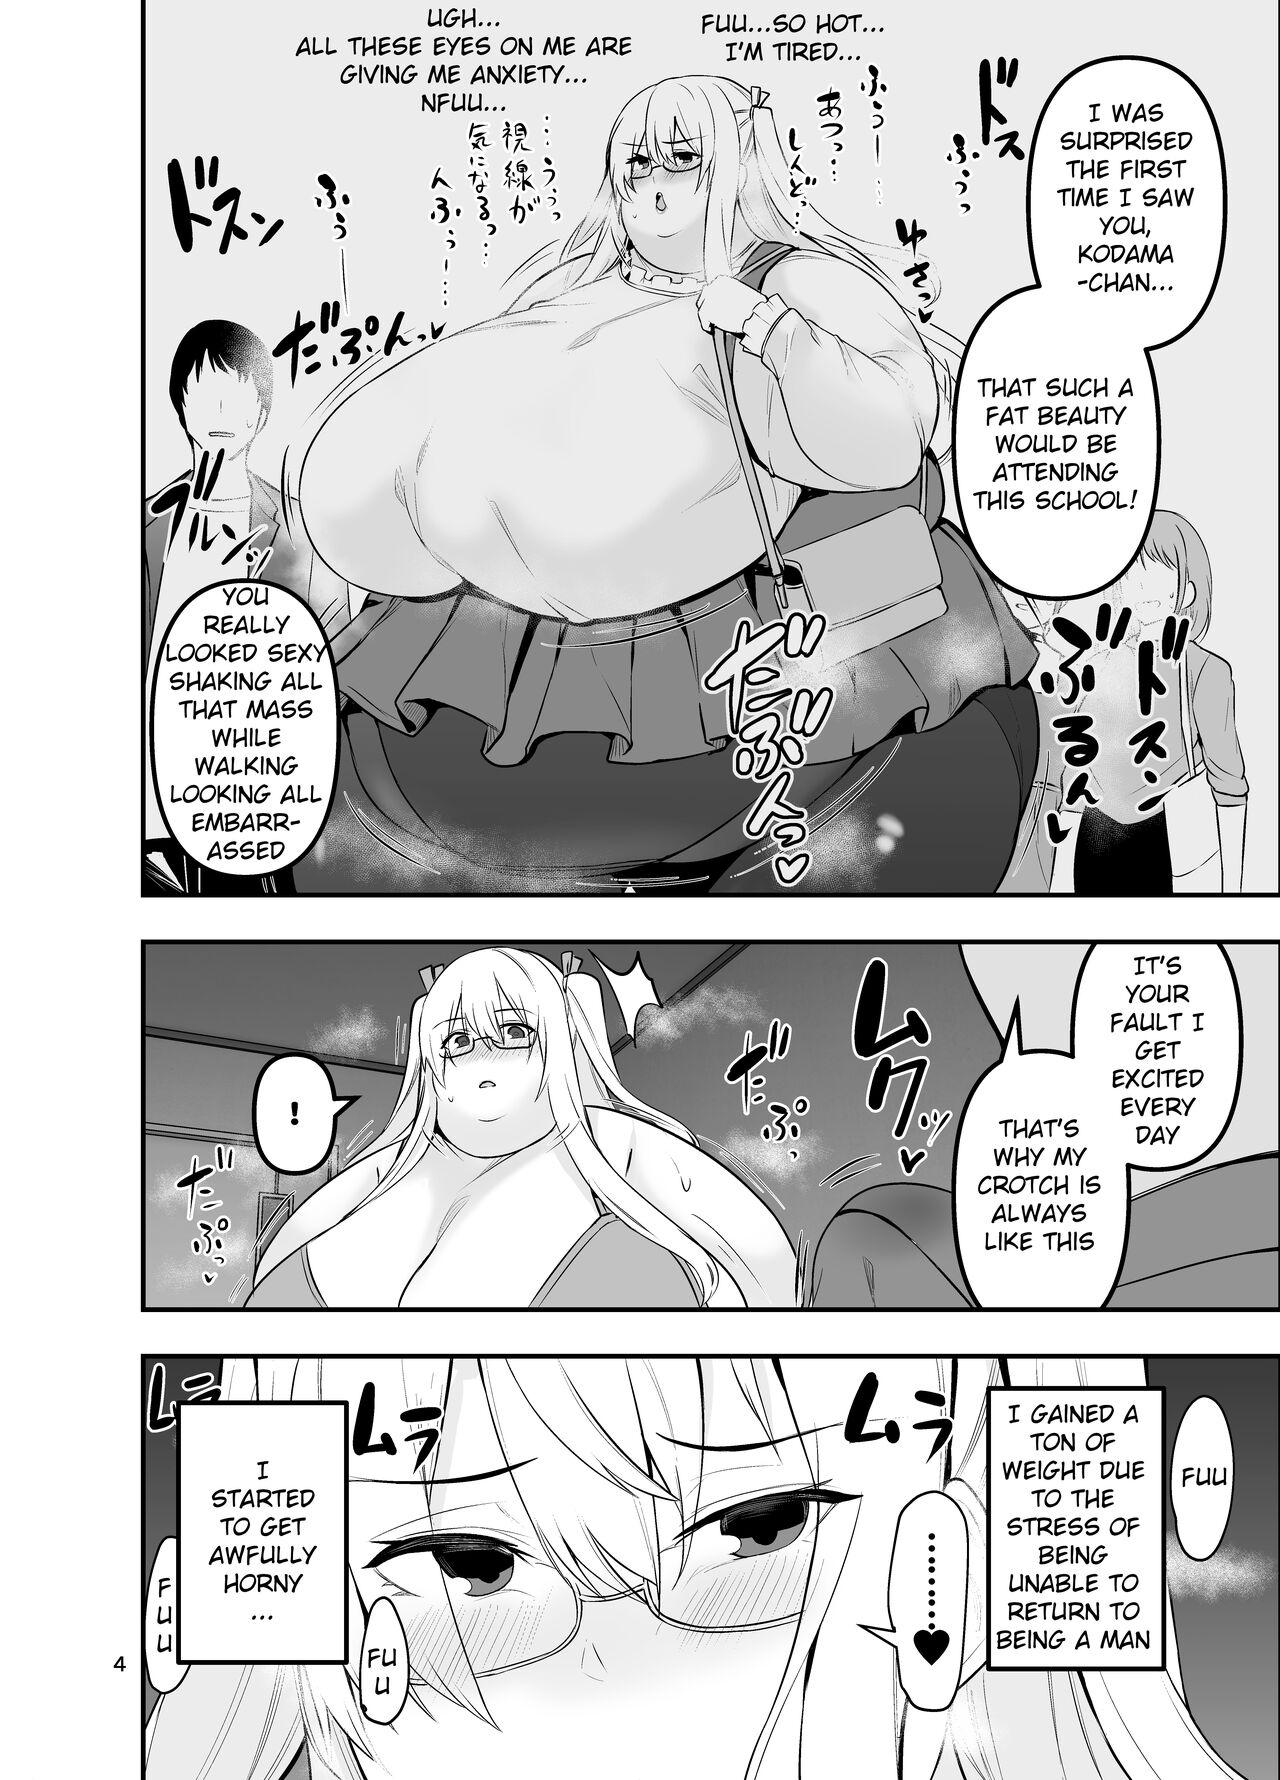 Grandma Triple digit weight Kodama-chan and H! Hot Teen - Page 4